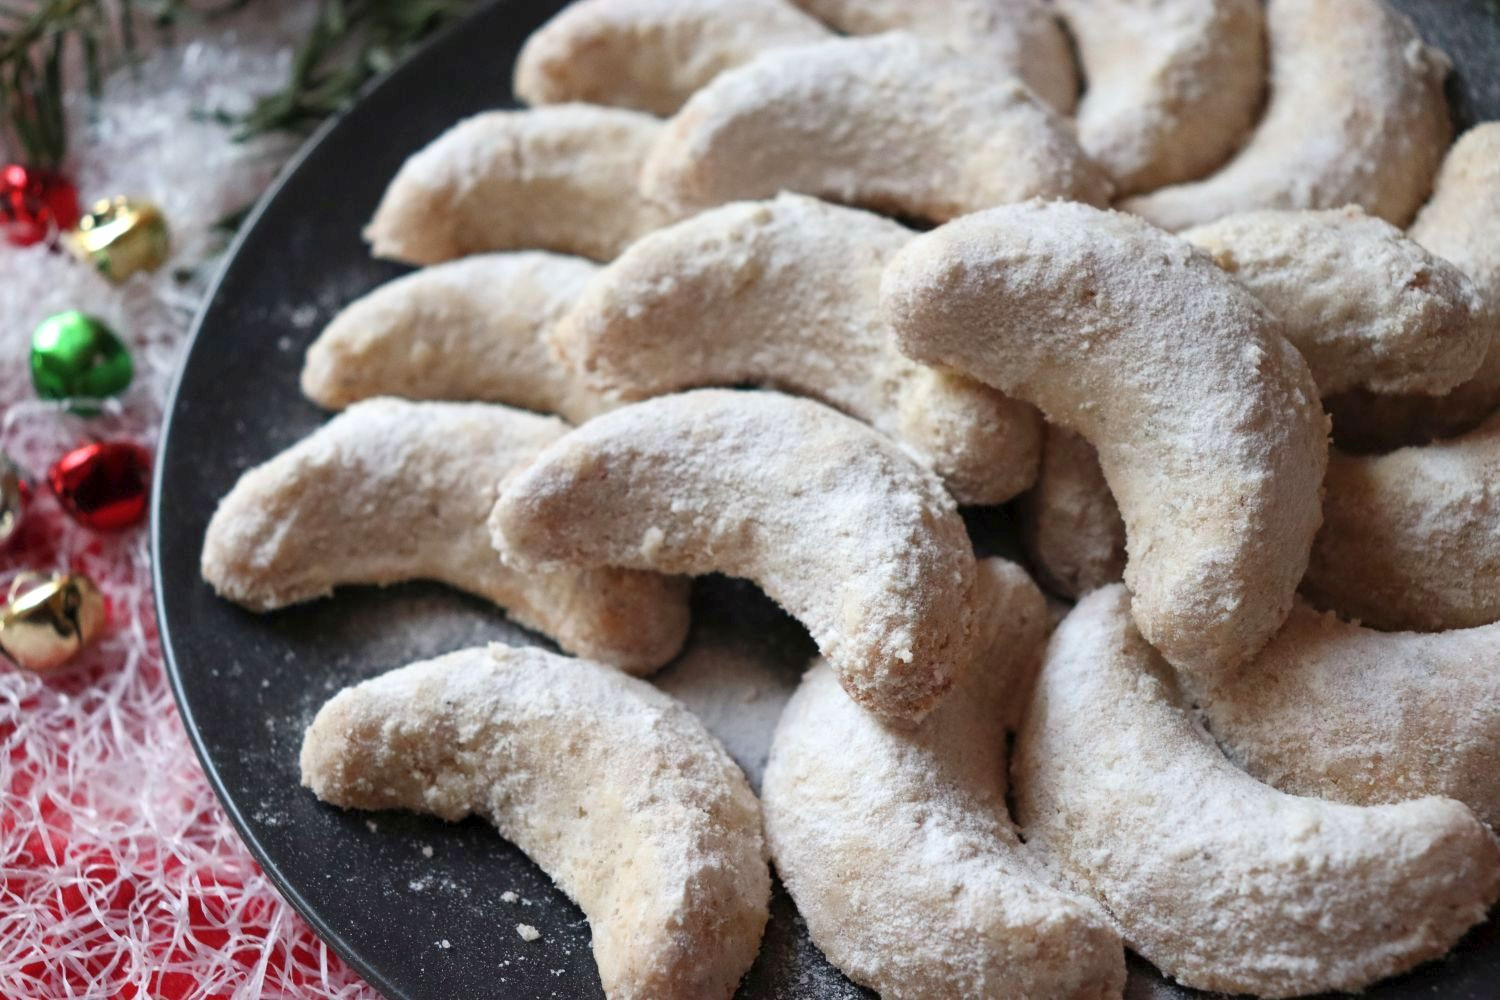 Vanillekipferl - German Vanilla Crescent Cookies - German Christmas Cookies which melt in your mouth